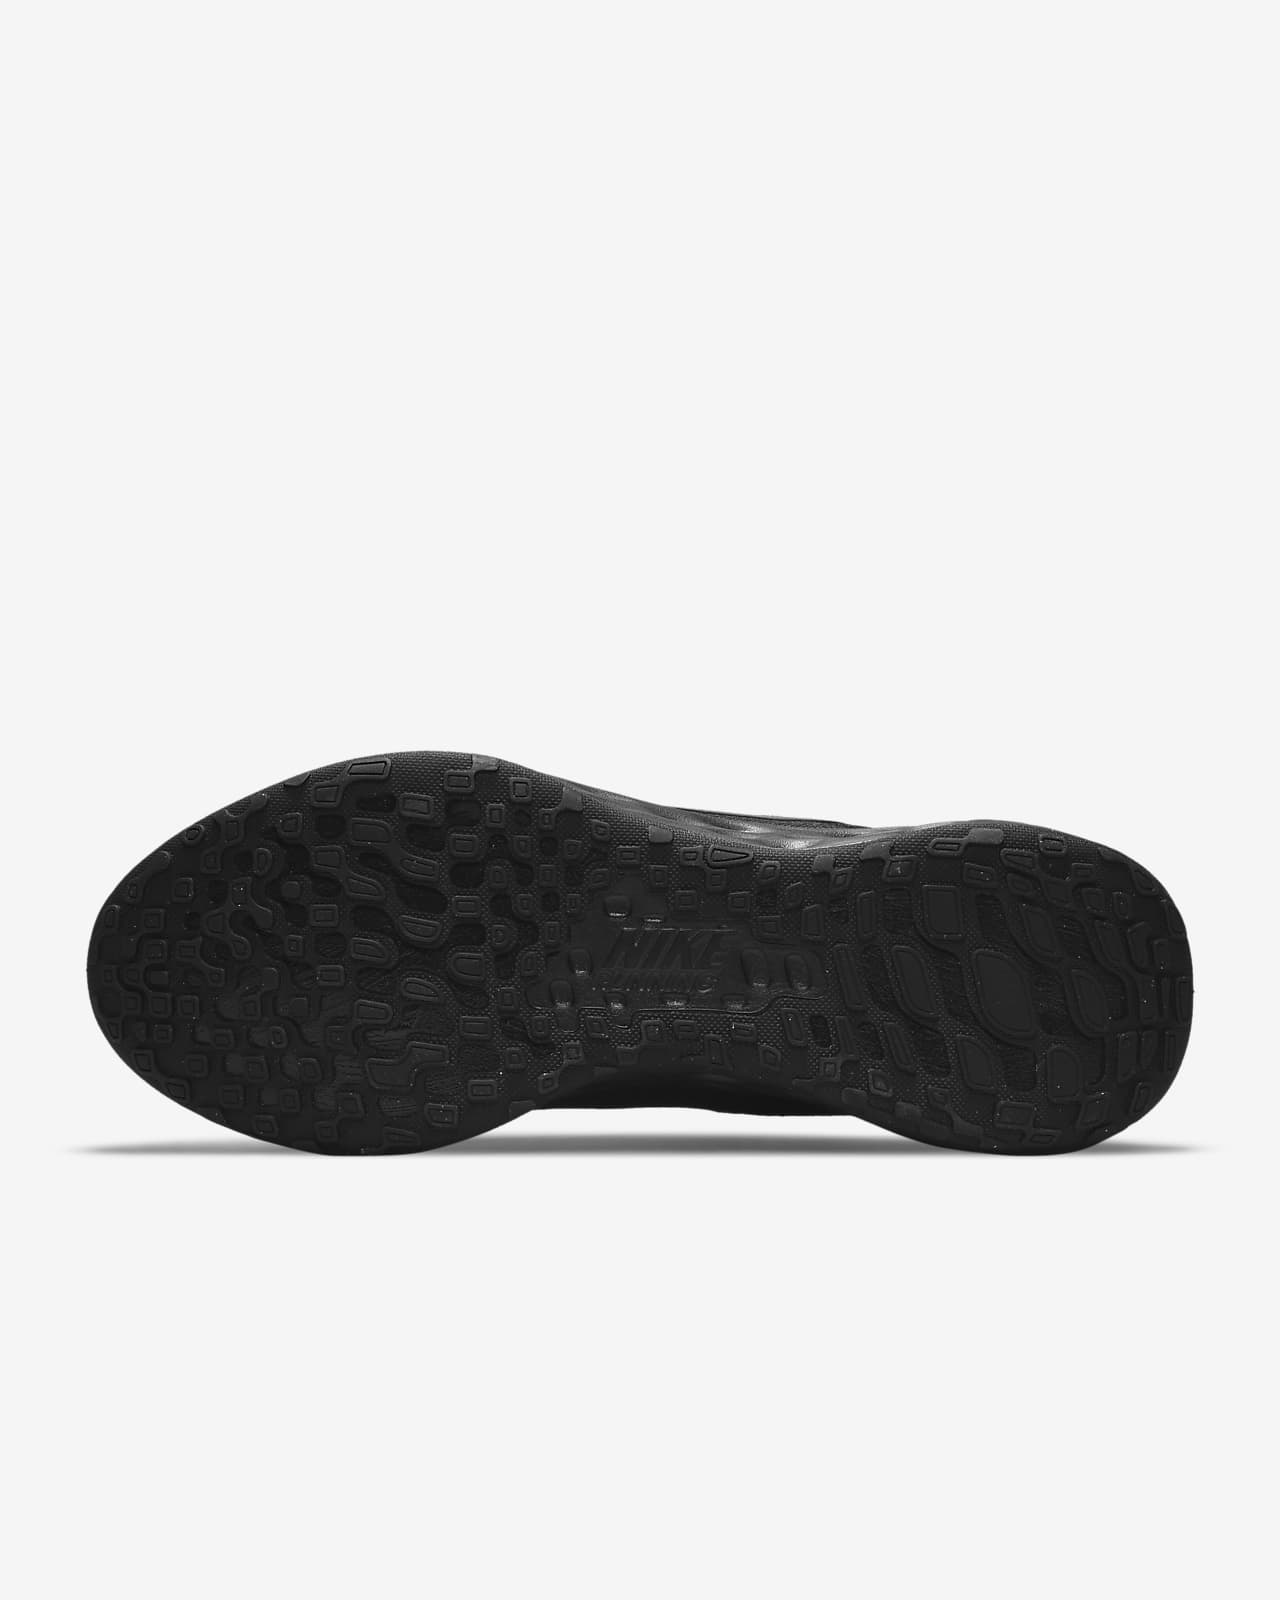 Nike NIKE REVOLUTION 6 NN Noir / Blanc - Livraison Gratuite  Spartoo ! - Chaussures  Chaussures-de-sport Homme 37,80 €